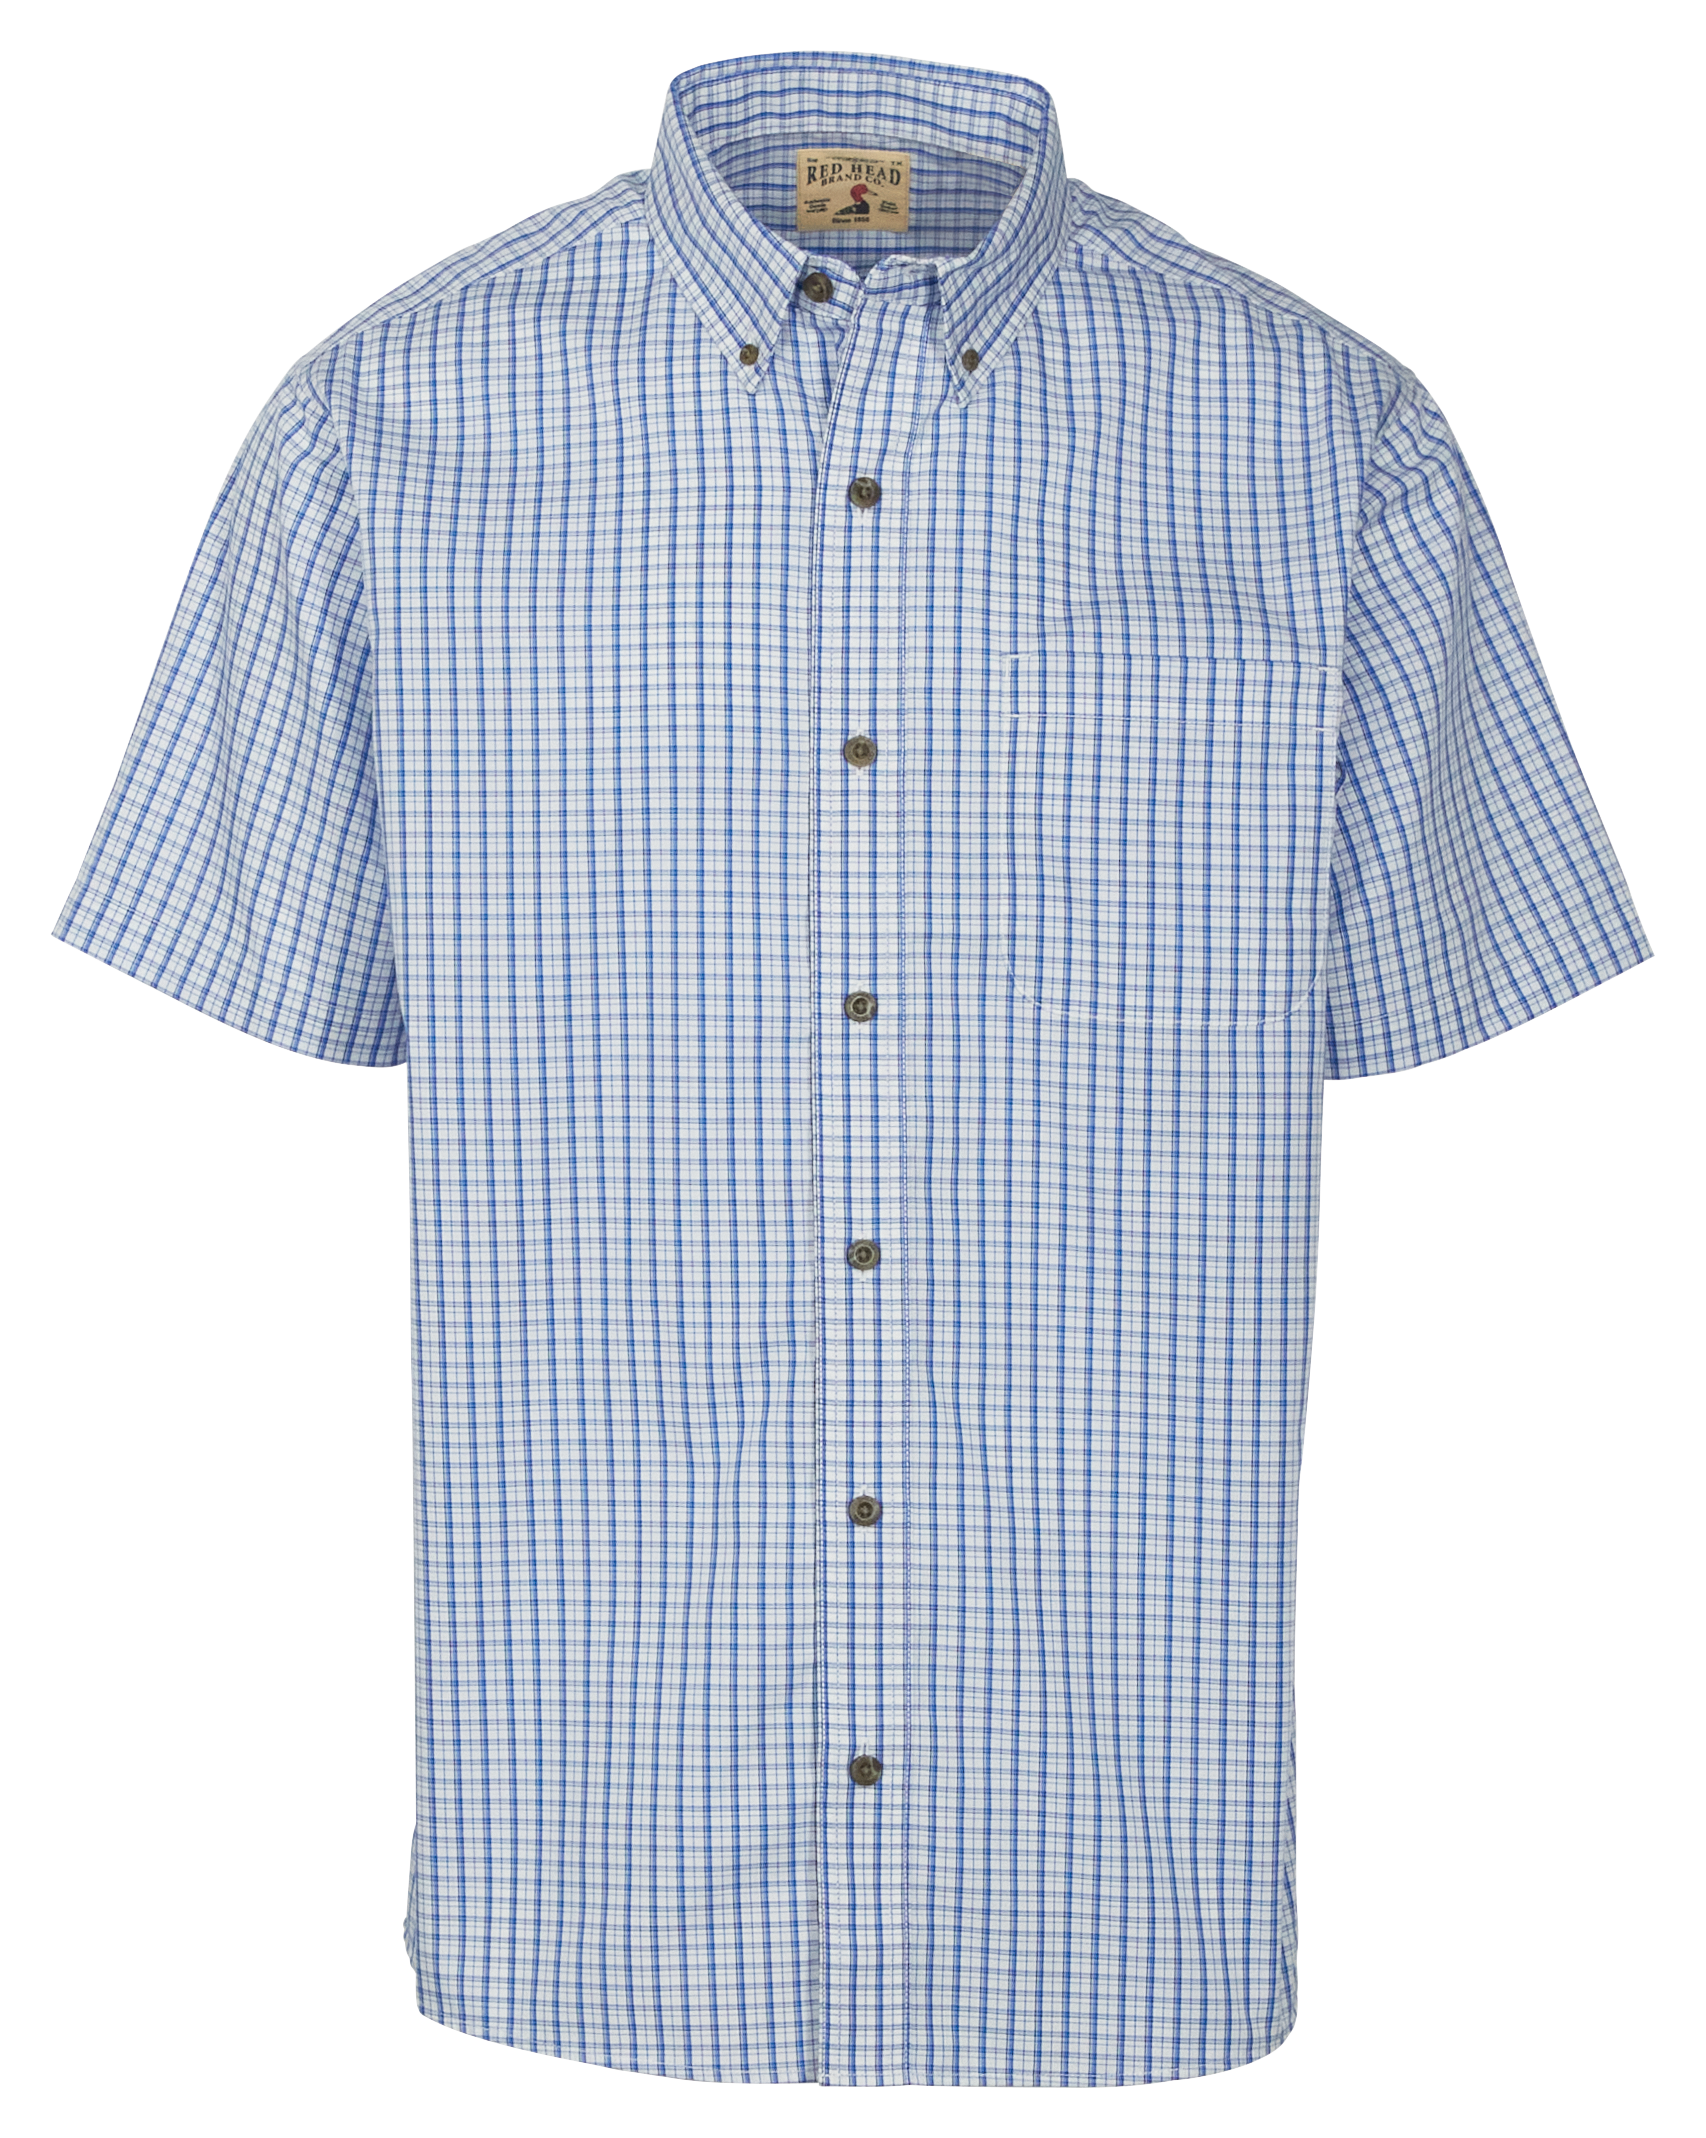 RedHead Wrinkle-Free Plaid Short-Sleeve Button-Down Shirt for Men